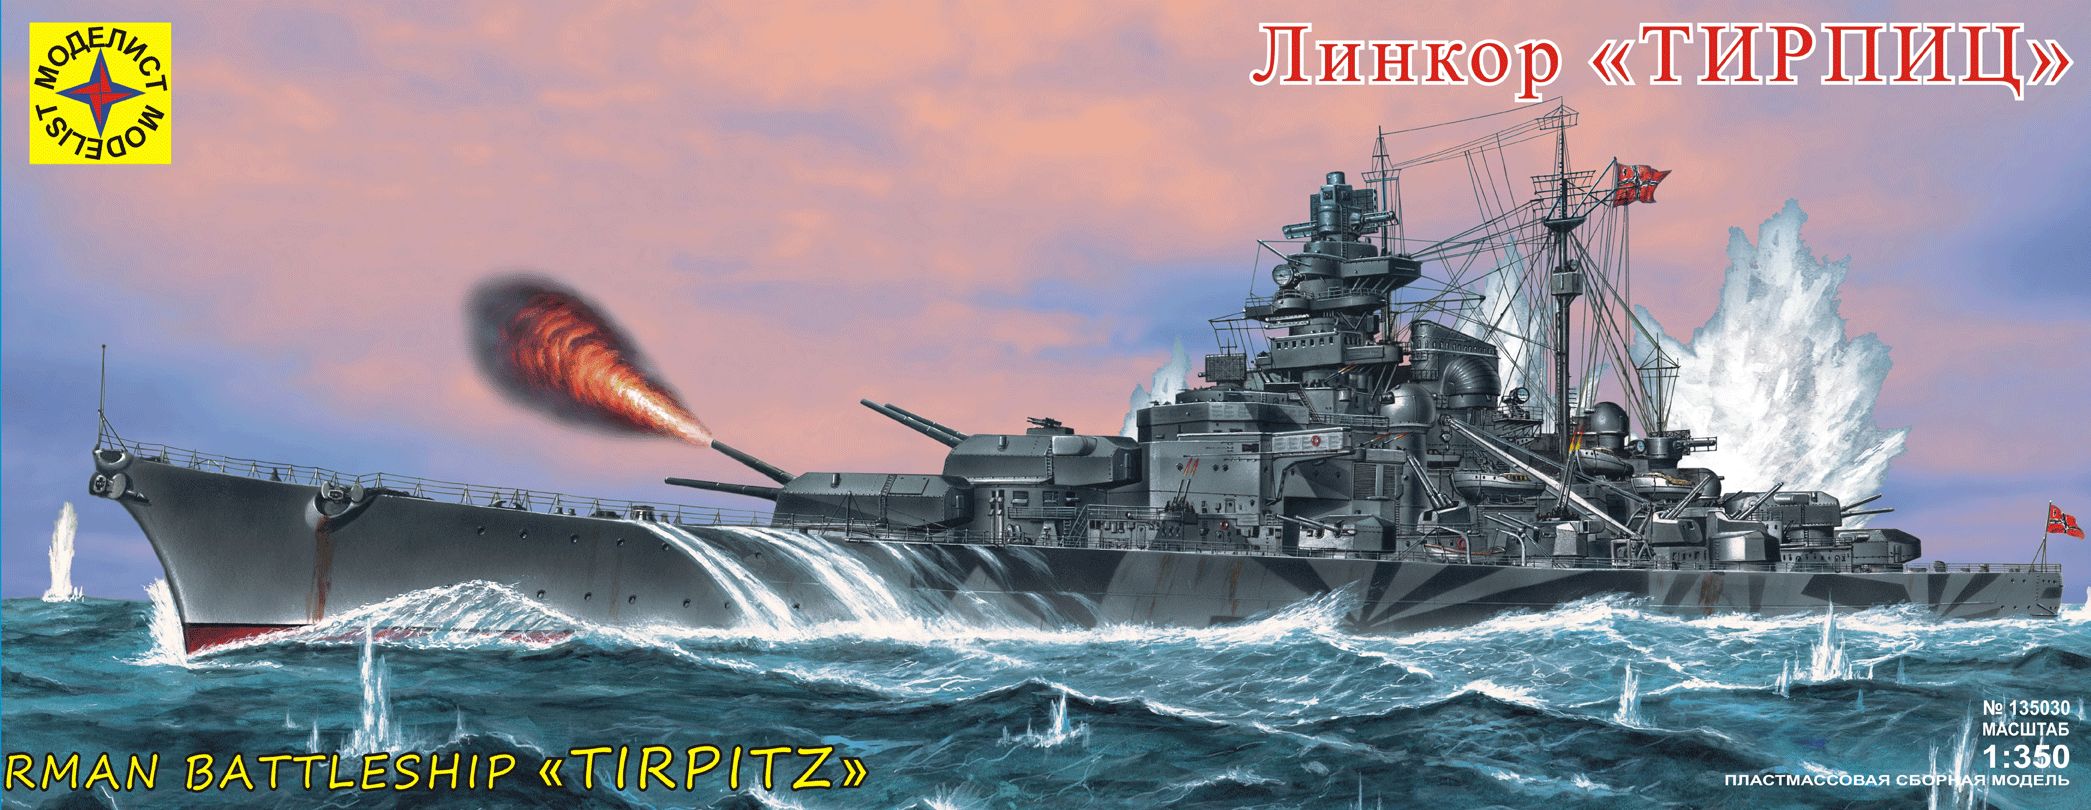 135030  флот  Линкор "Тирпиц" (1:350)